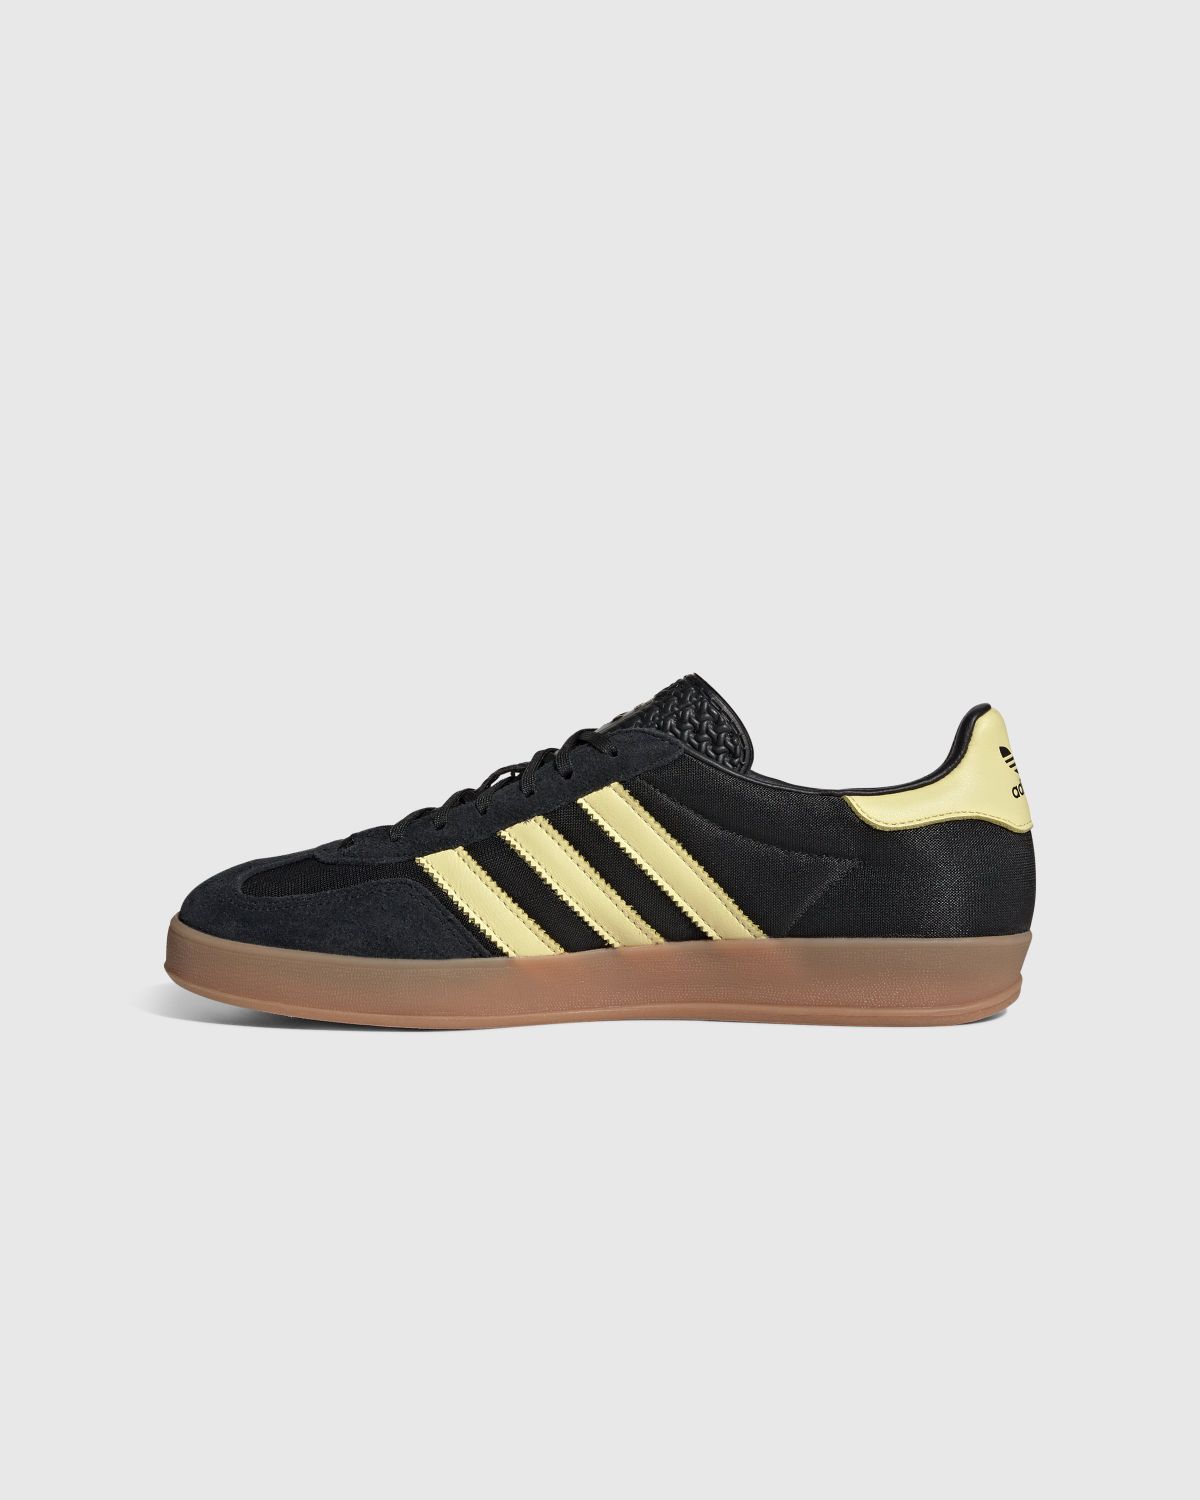 Adidas – Gazelle Core Black/Gum - Sneakers - Black - Image 2